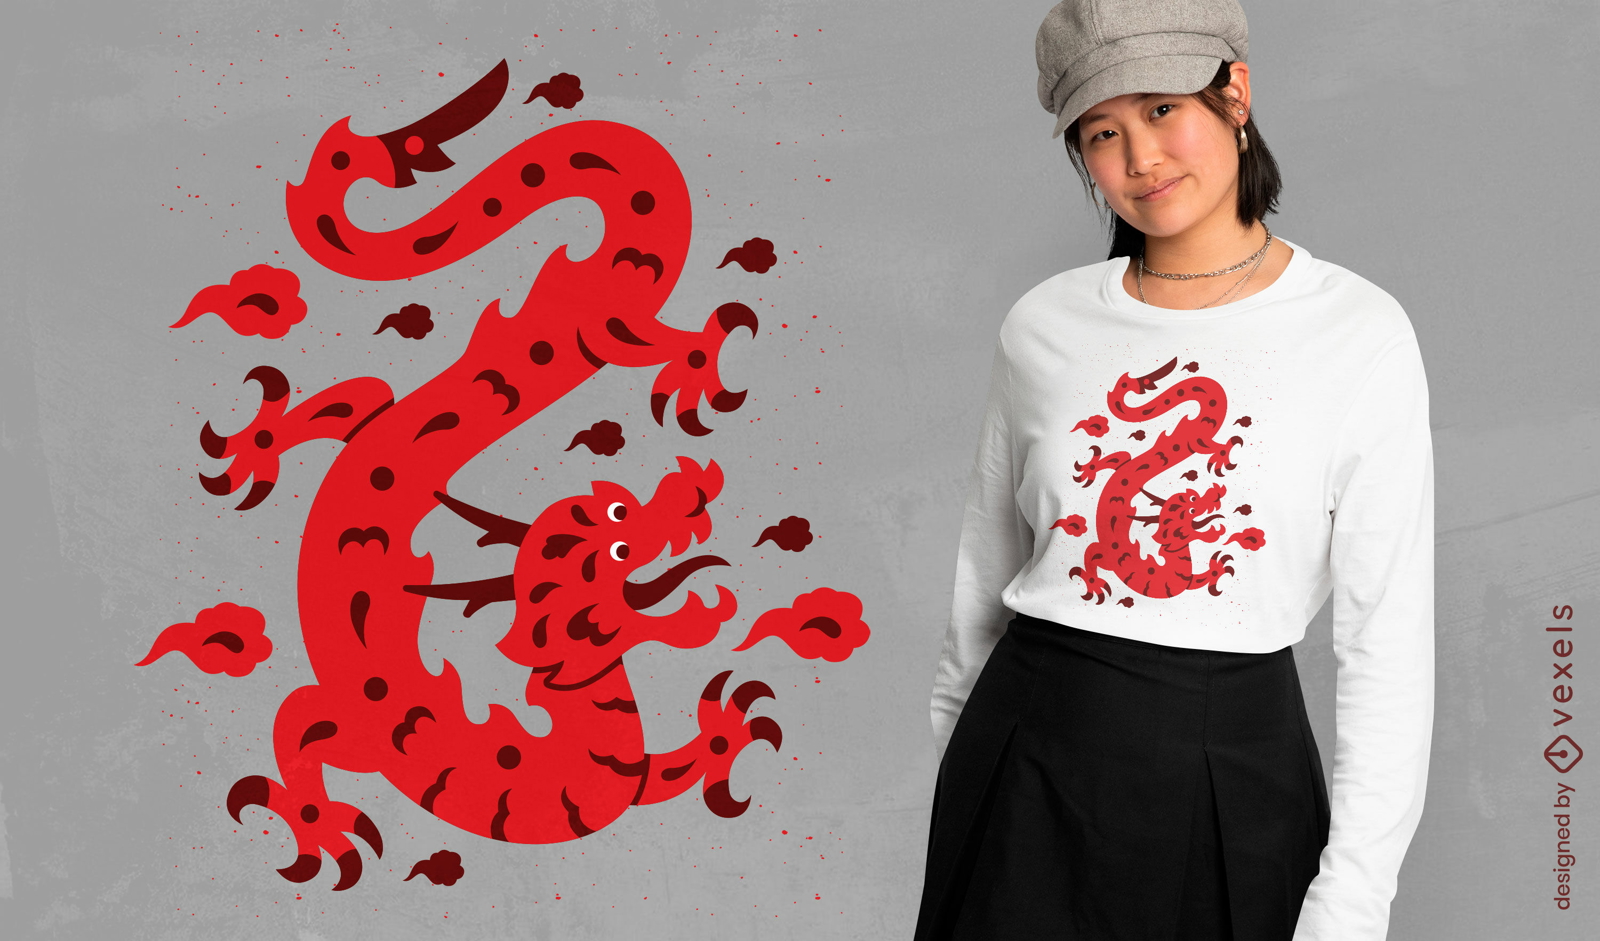 Fiery red dragon t-shirt design